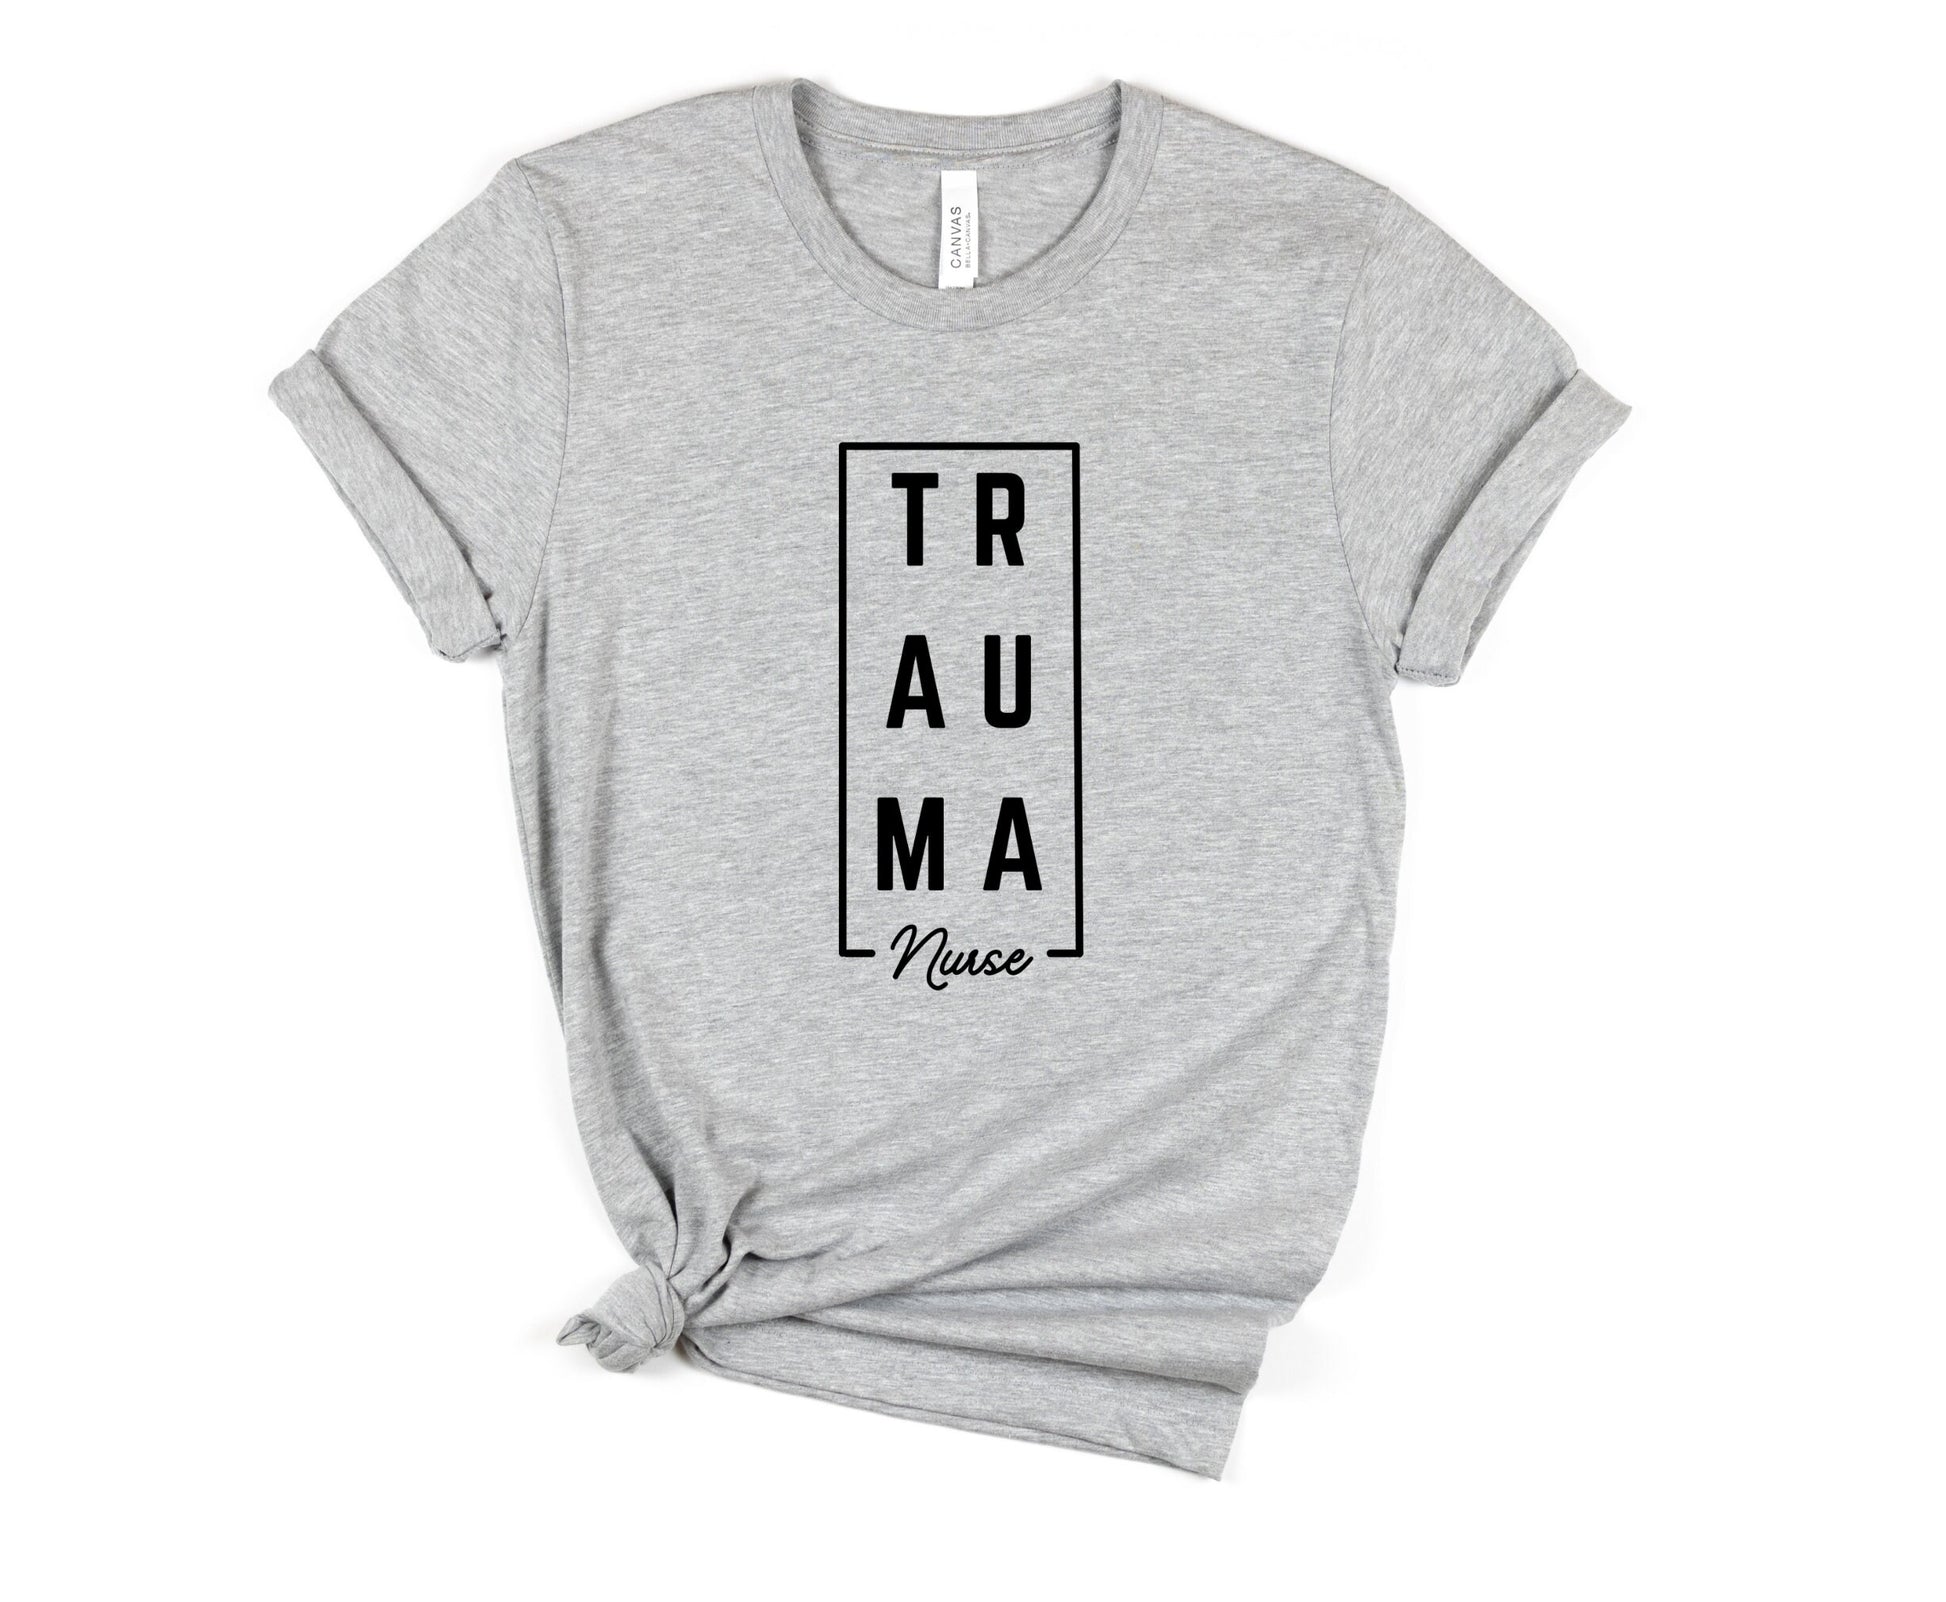 trauma nurse shirt, trauma rn shirt, trauma shirt, trauma icu, trauma er, nurse's week gifts, intensive care unit shirt, trauma emergency